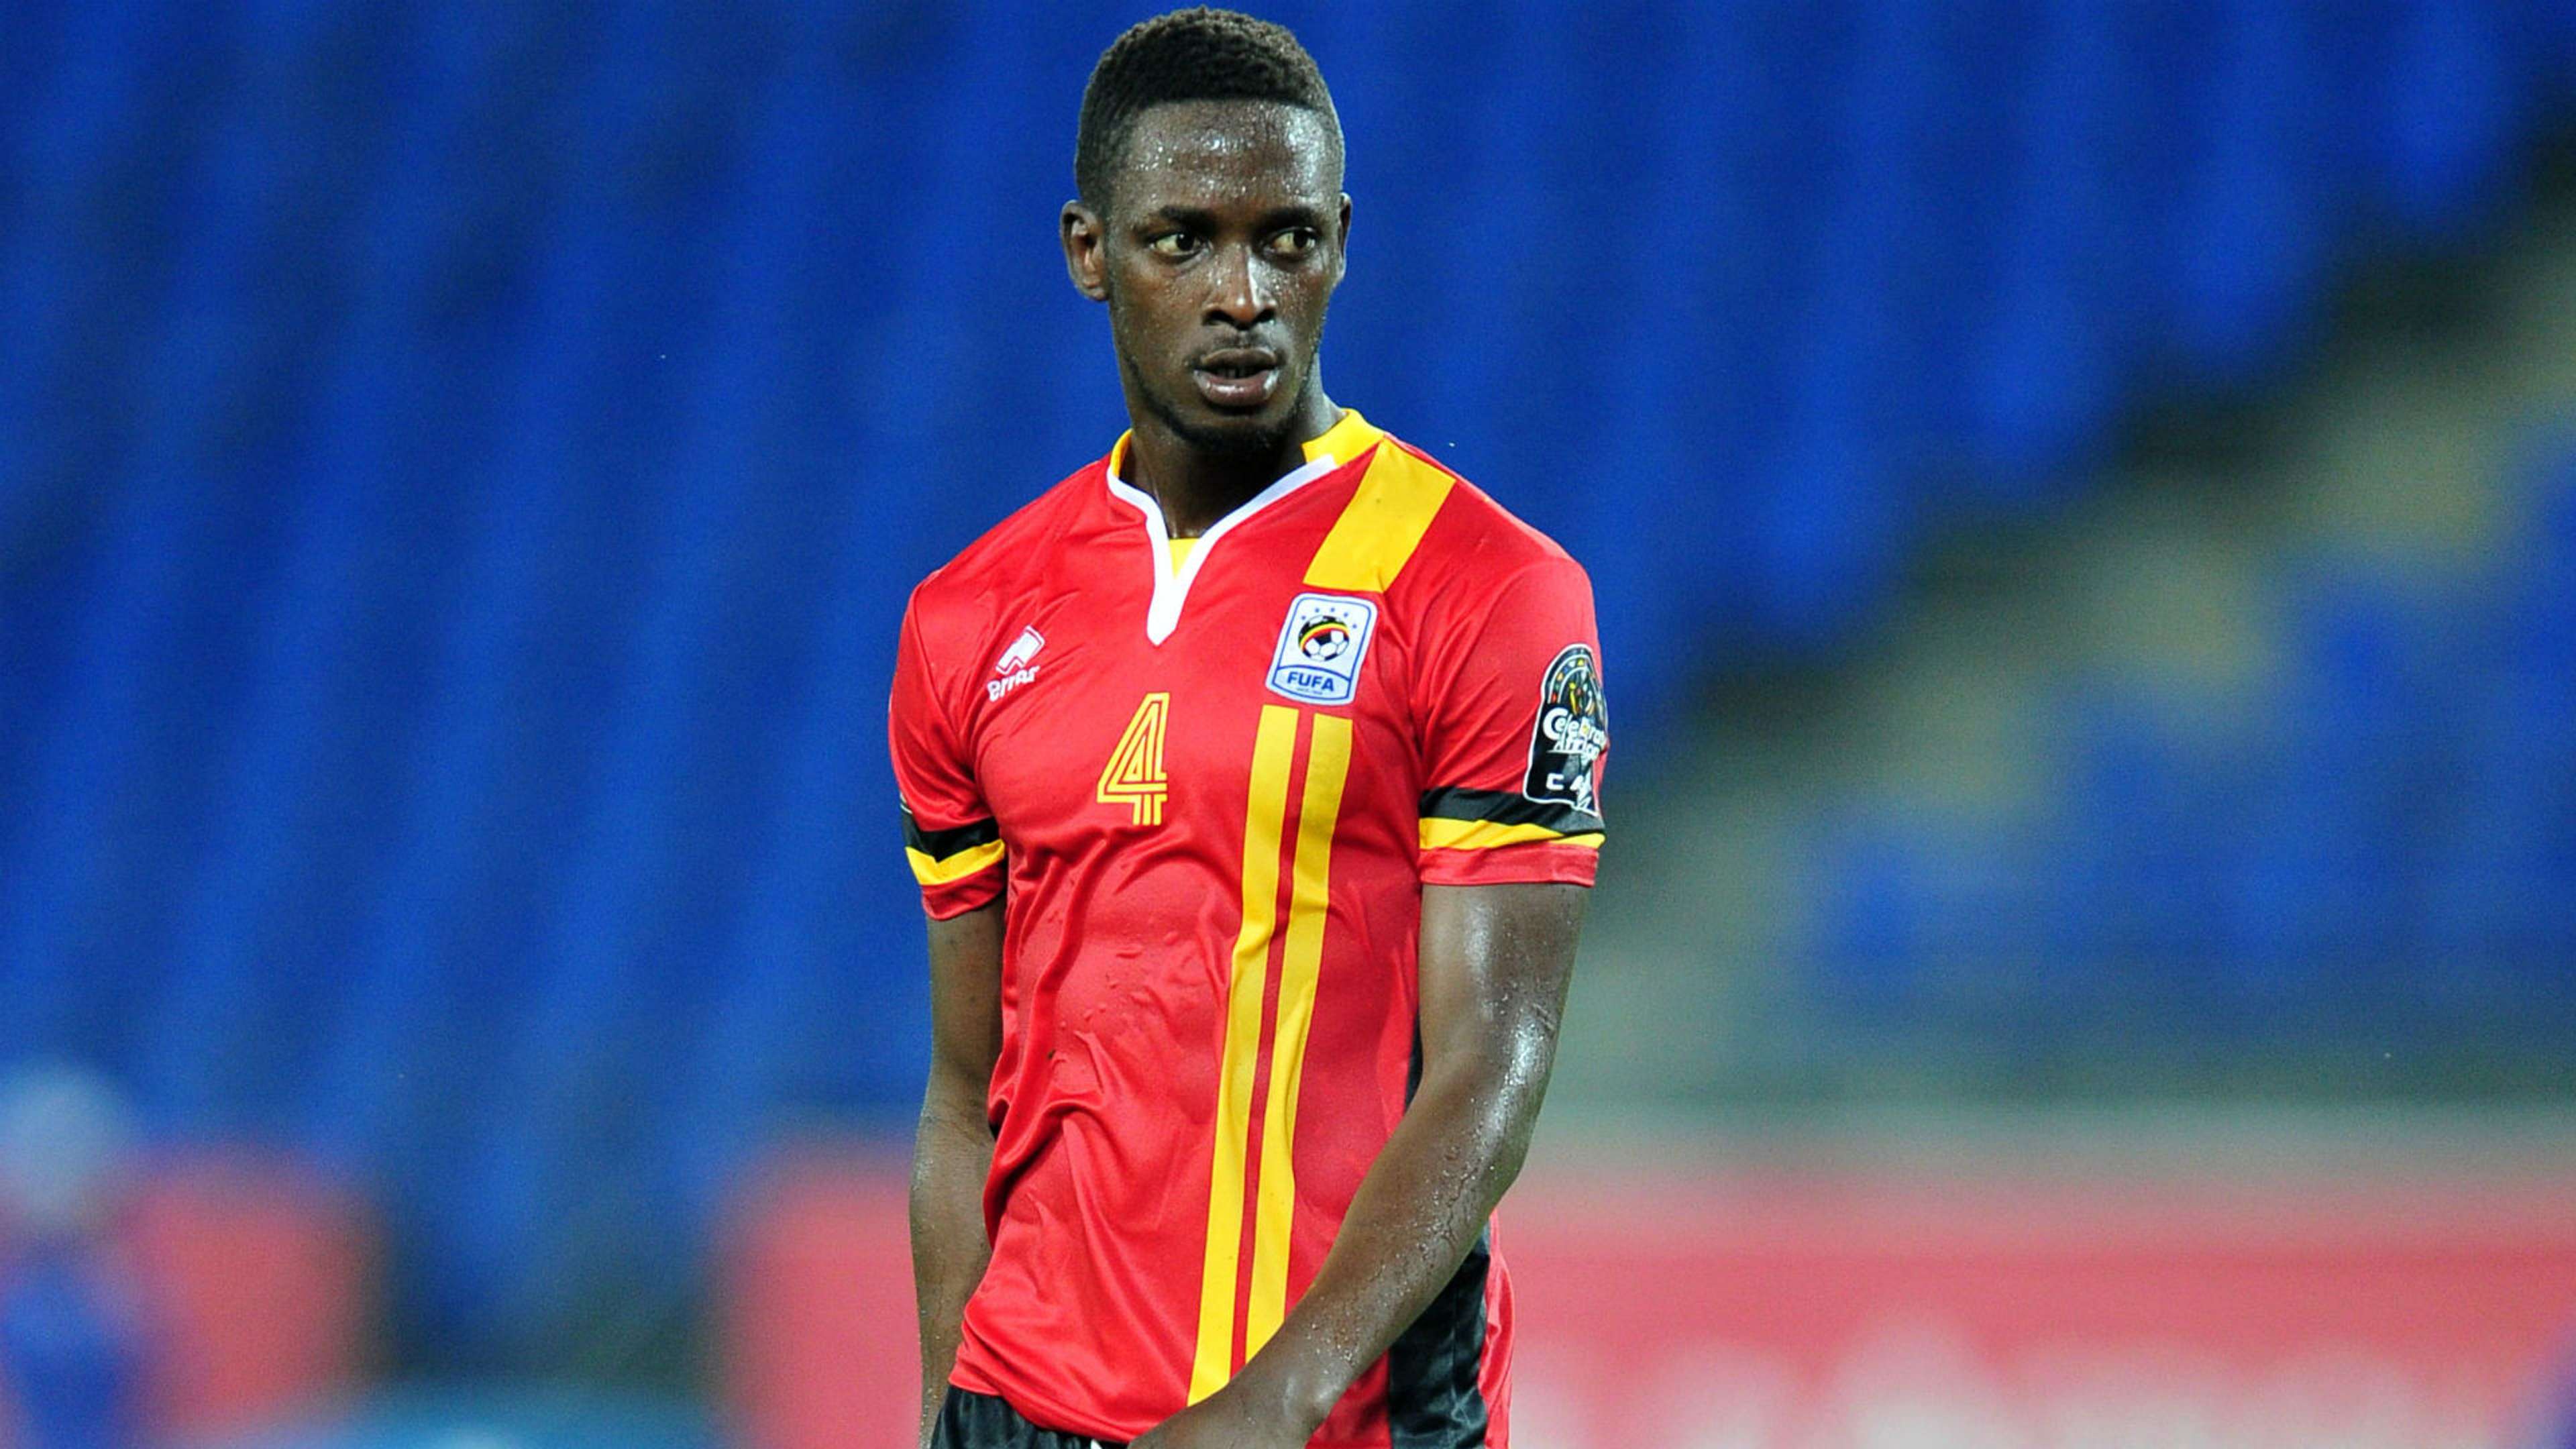 Murushid Juuko of Uganda during the 2017 Africa Cup of Nations Finals match between Uganda.